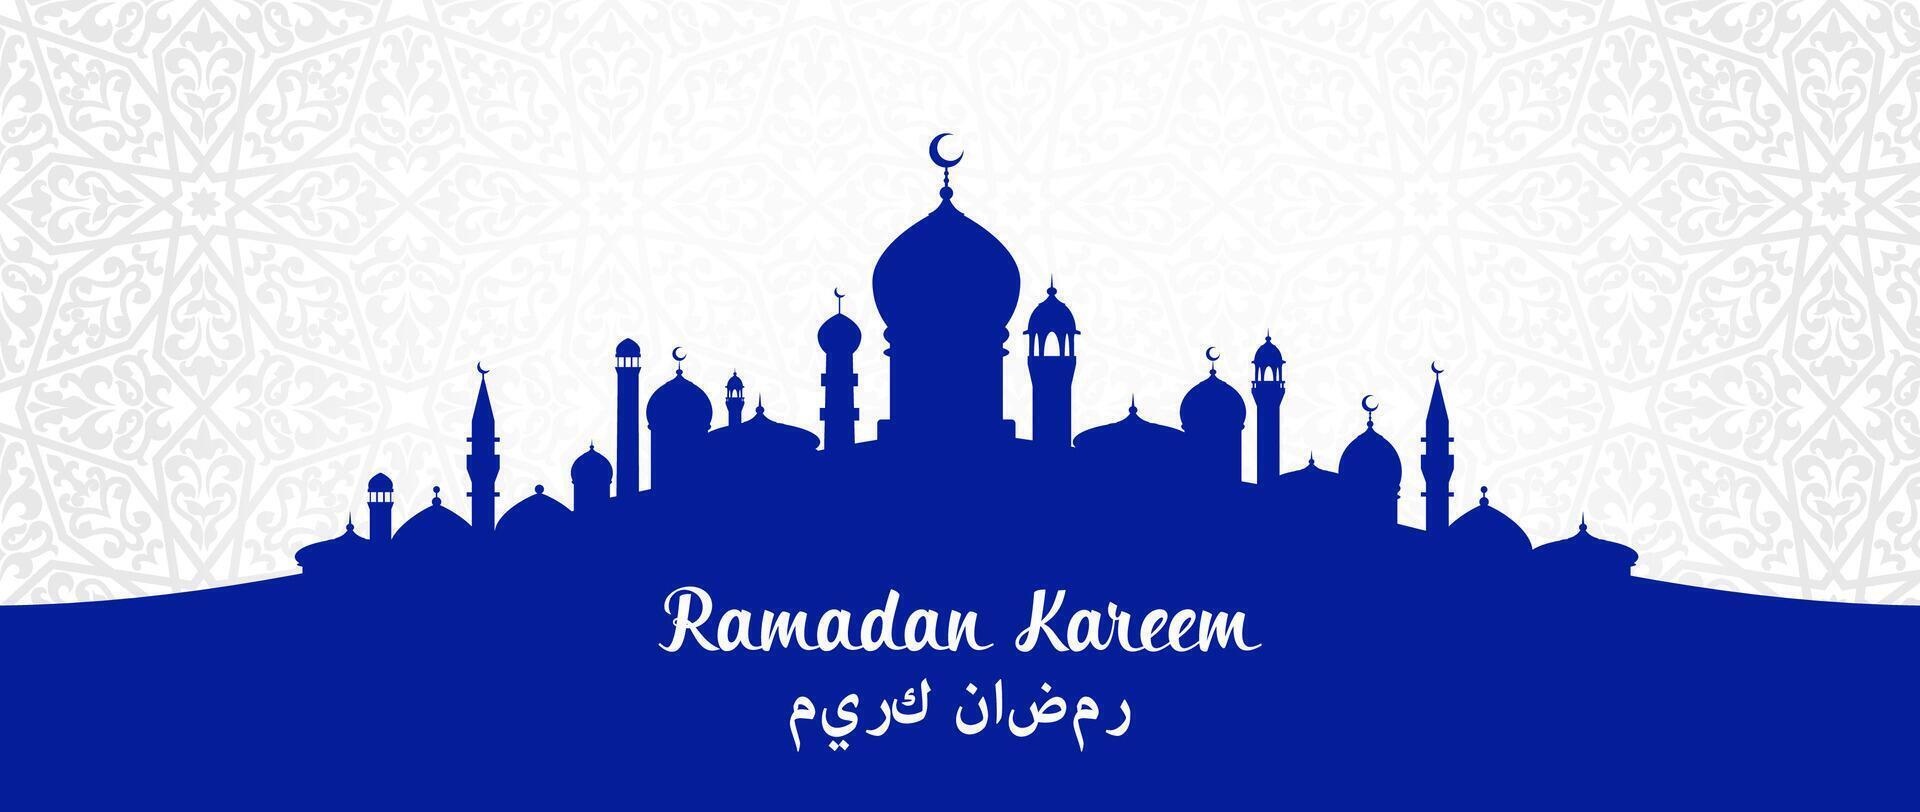 Ramadan kareem holiday, arabian city and mosque l vector